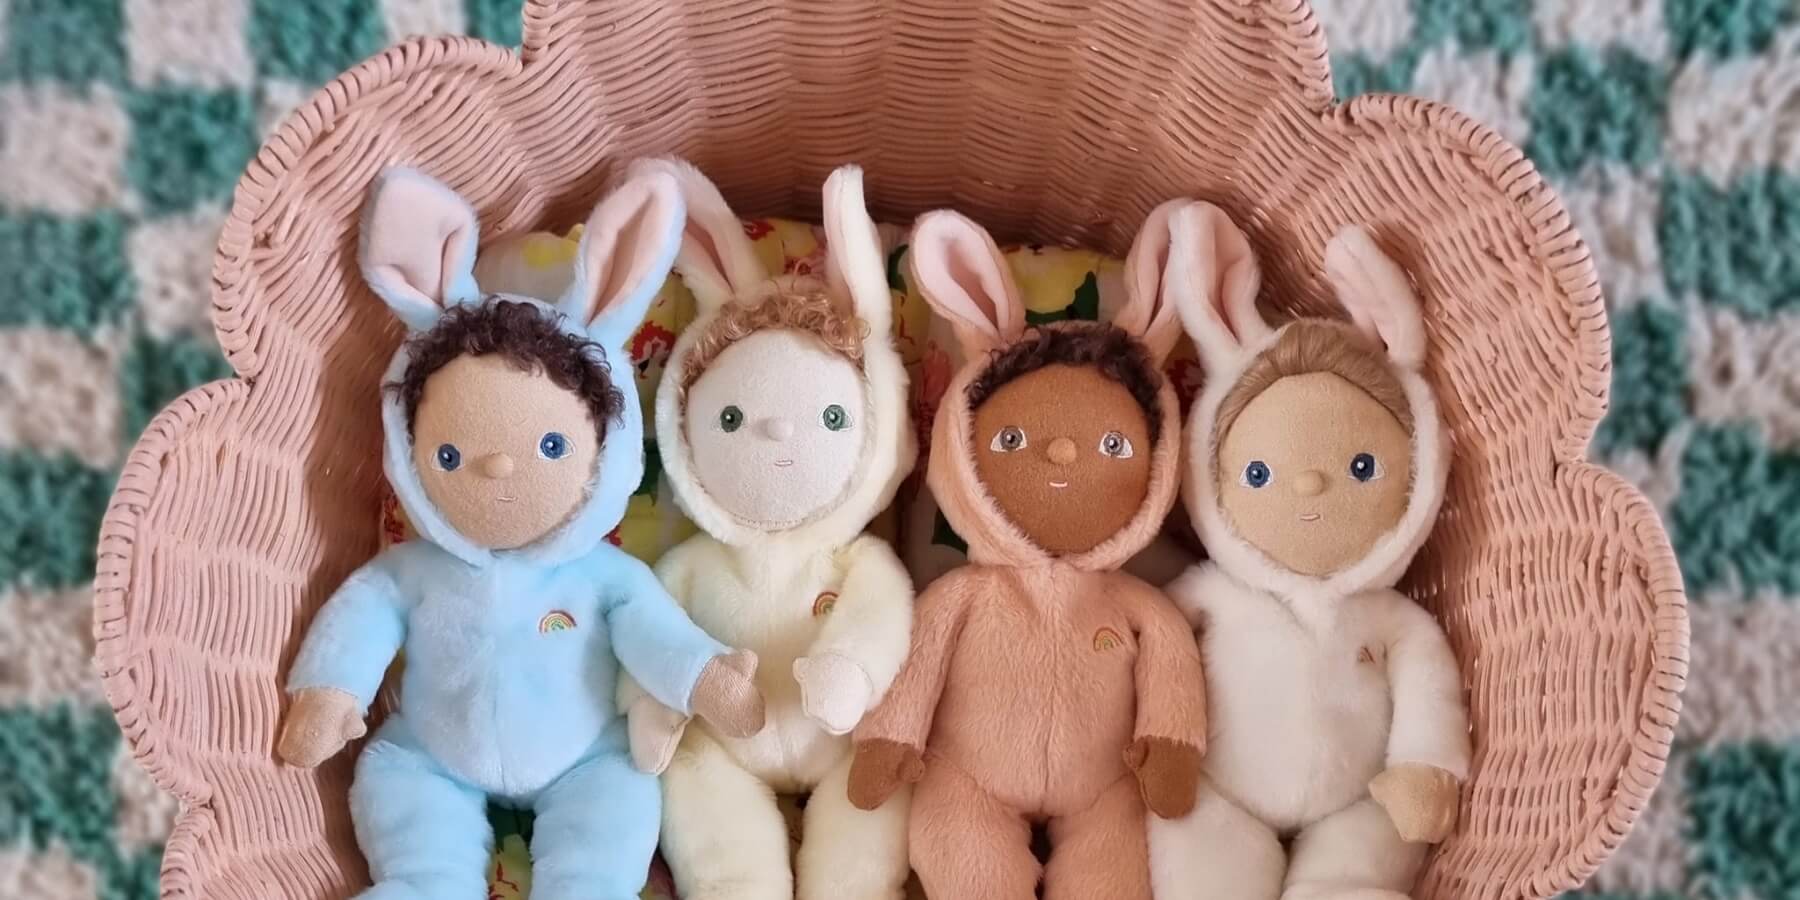 Olli Ella Easter Baskets and Limited Edition Dinkum Dolls from Oskar's Wooden Ark in Australia